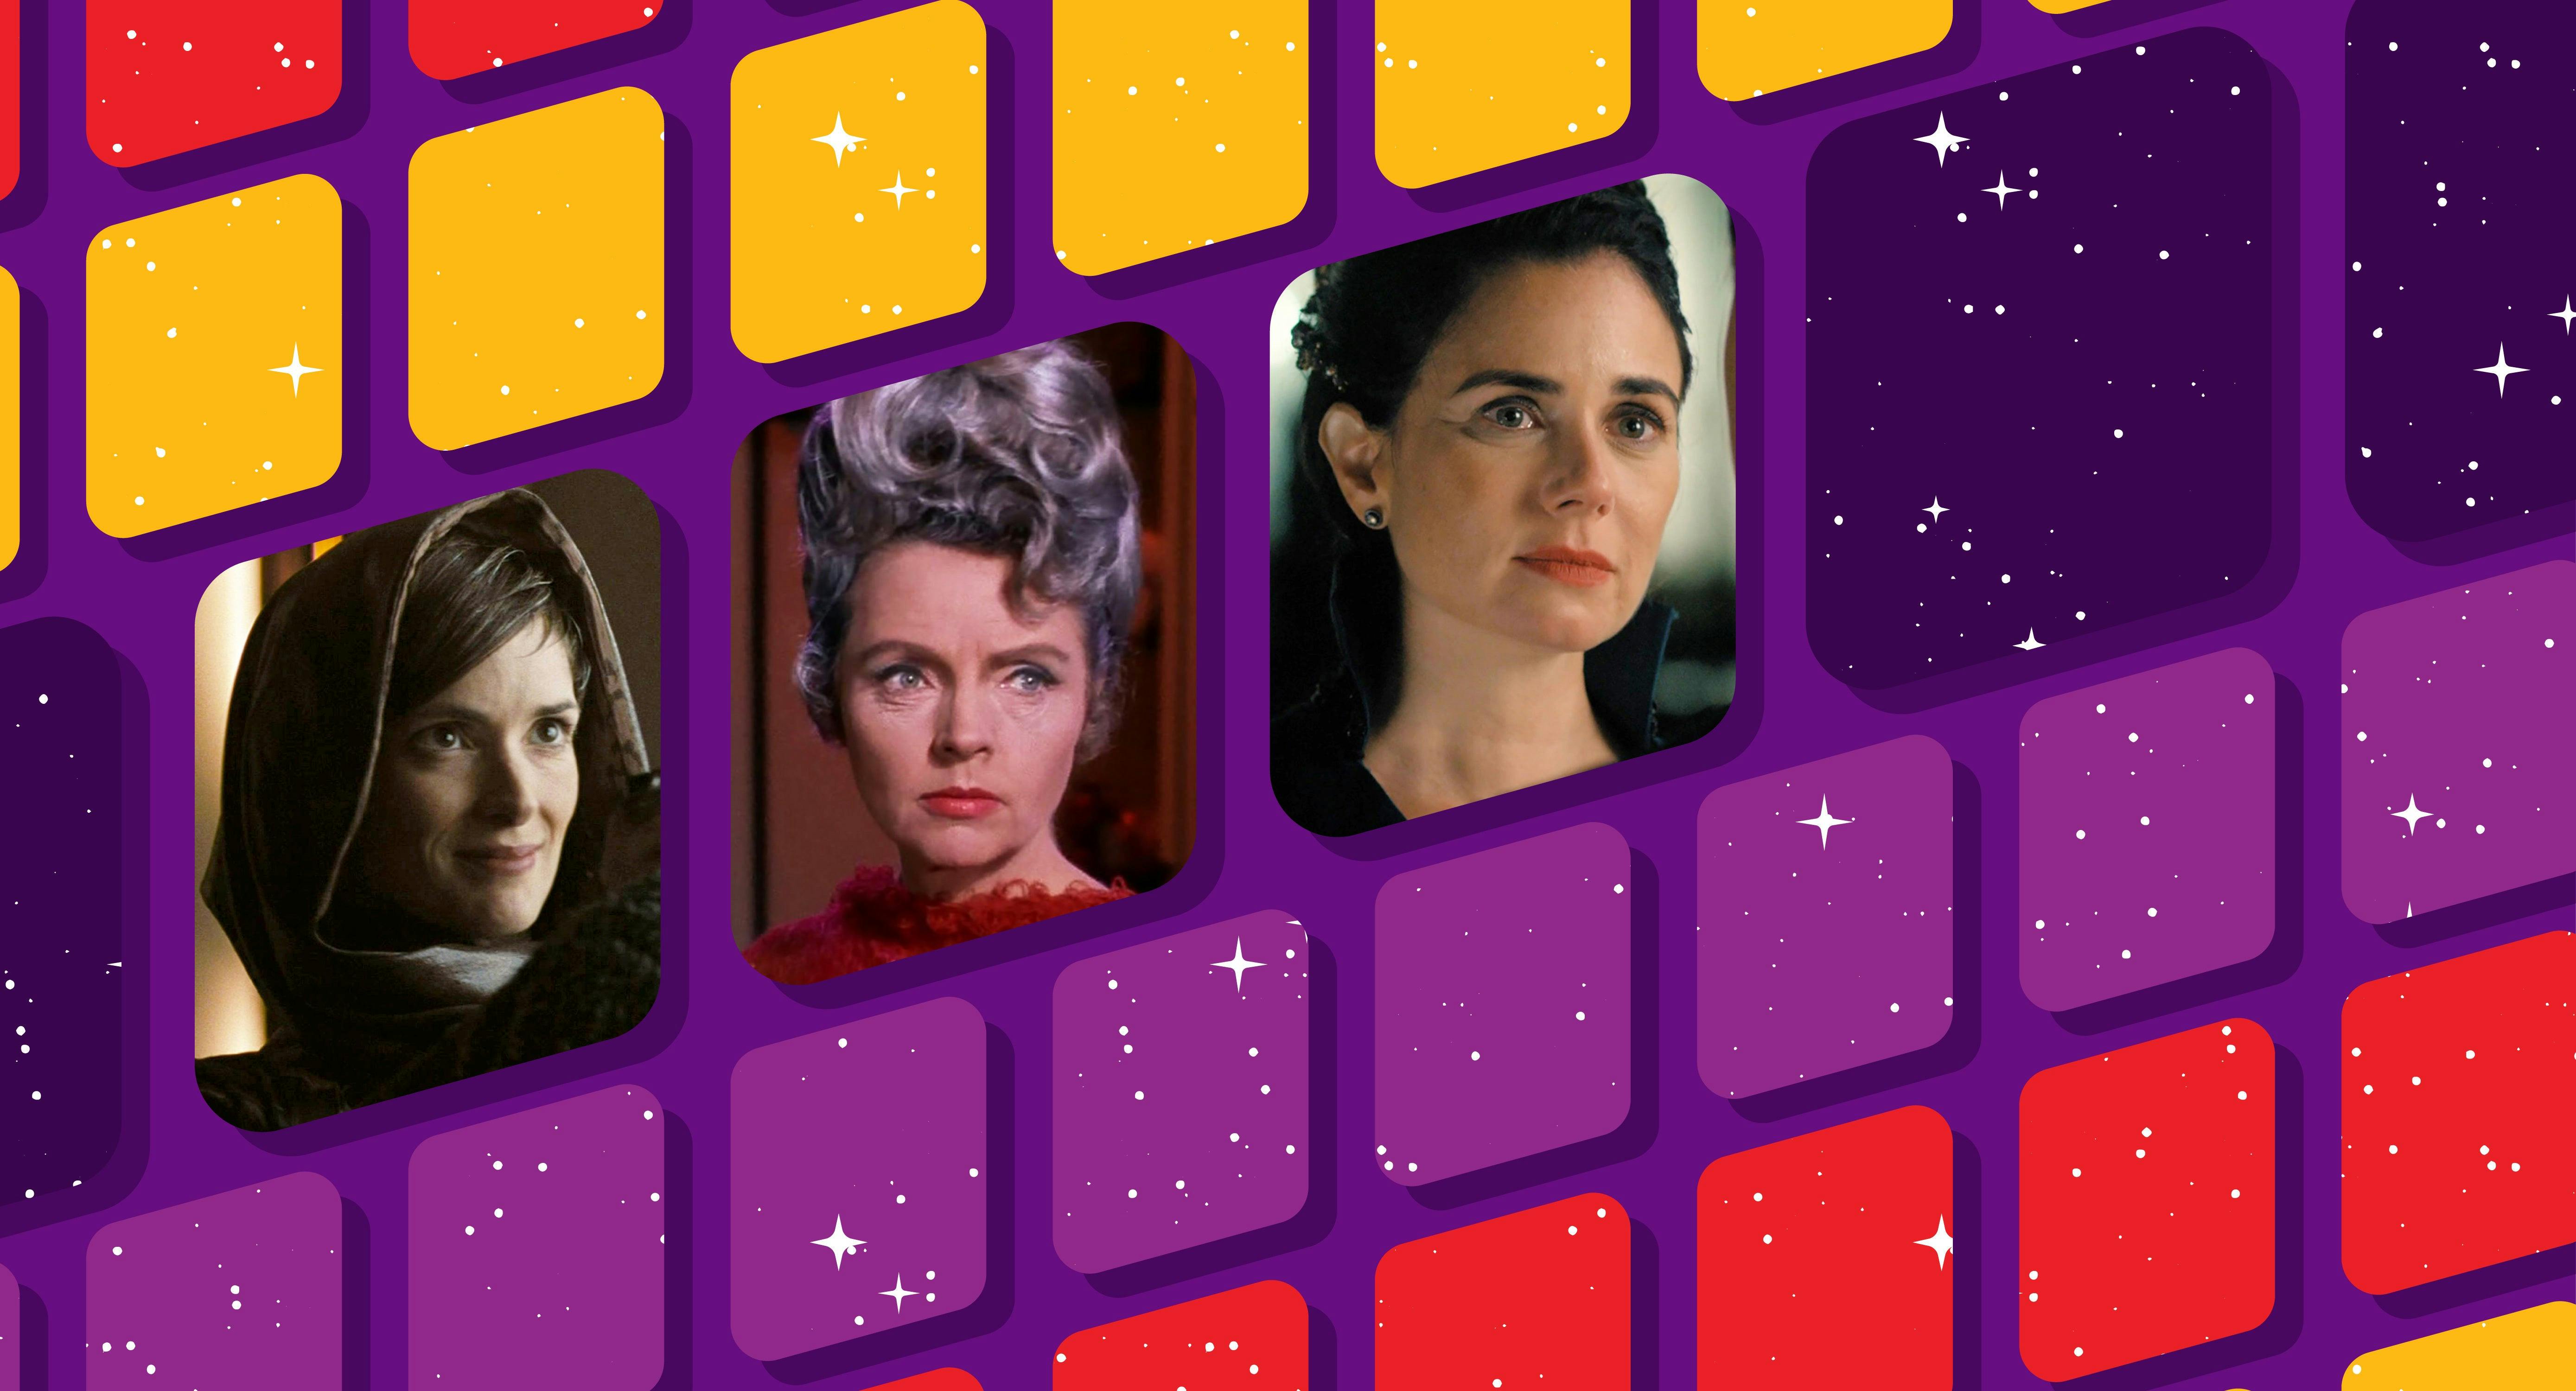 Actresses who have played Amanda Grayson: Winona Ryder, Jane Wyatt, &amp; Mia Kirshner